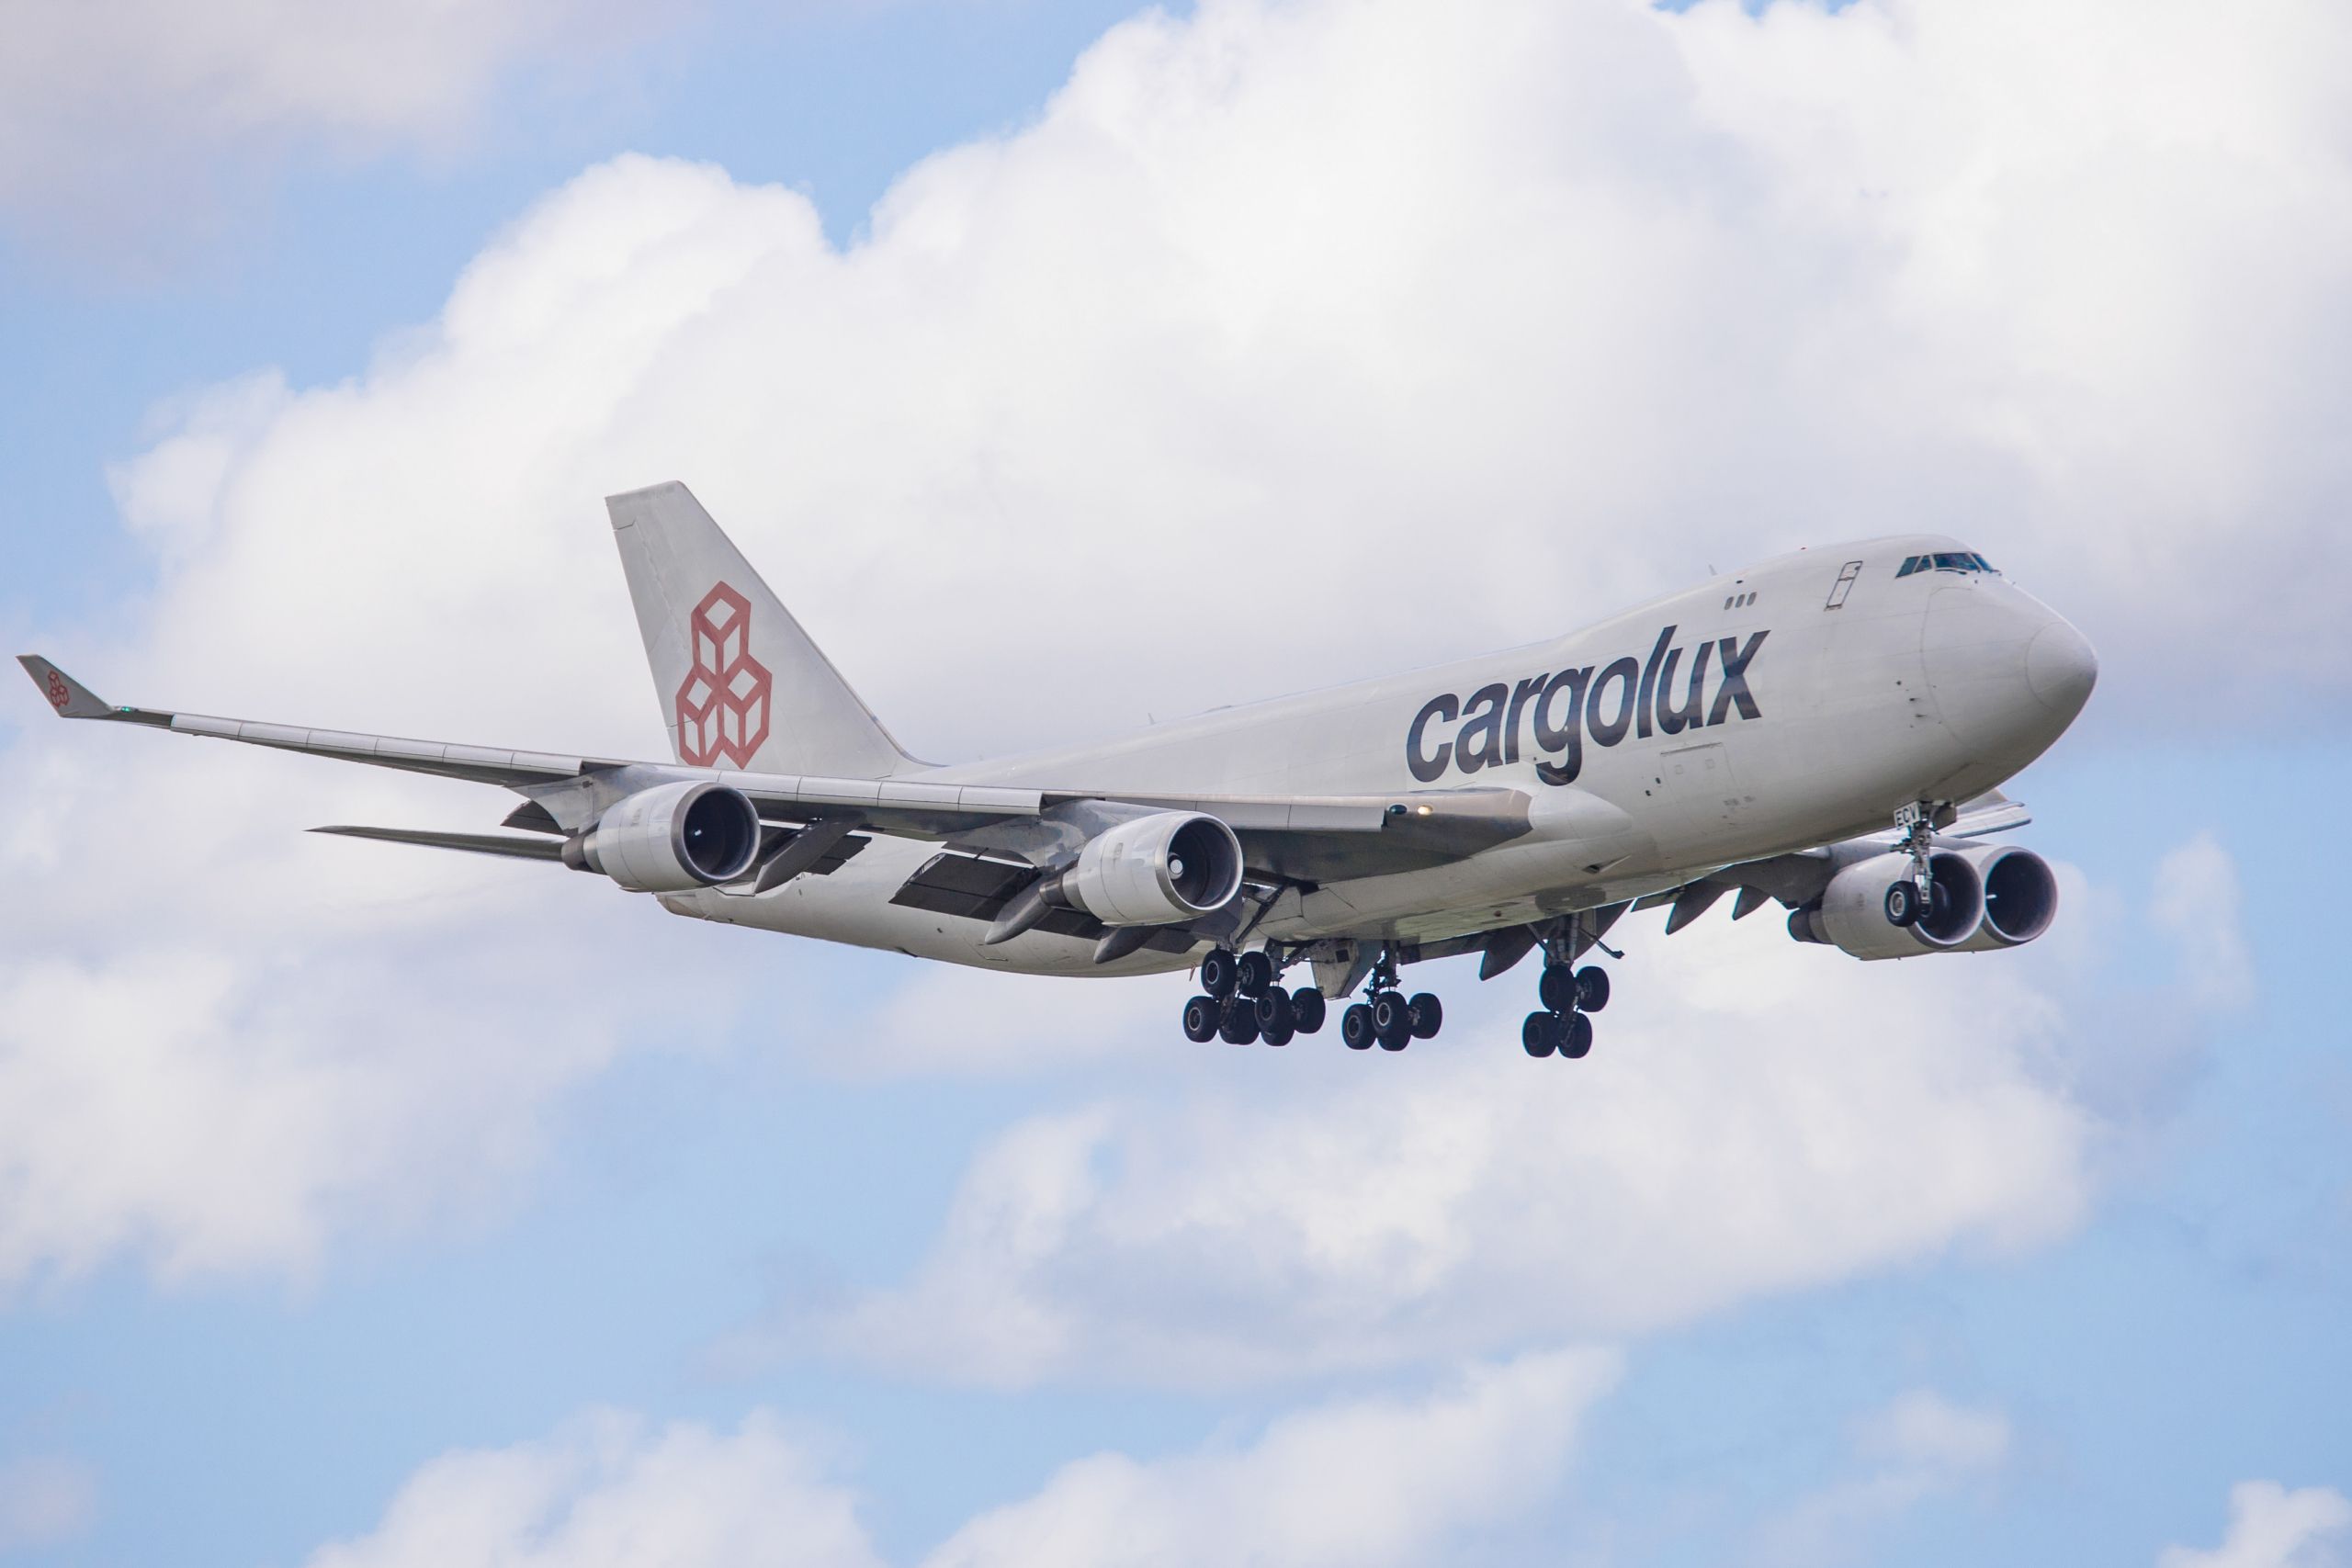 Cargolux Boeing 747-400F